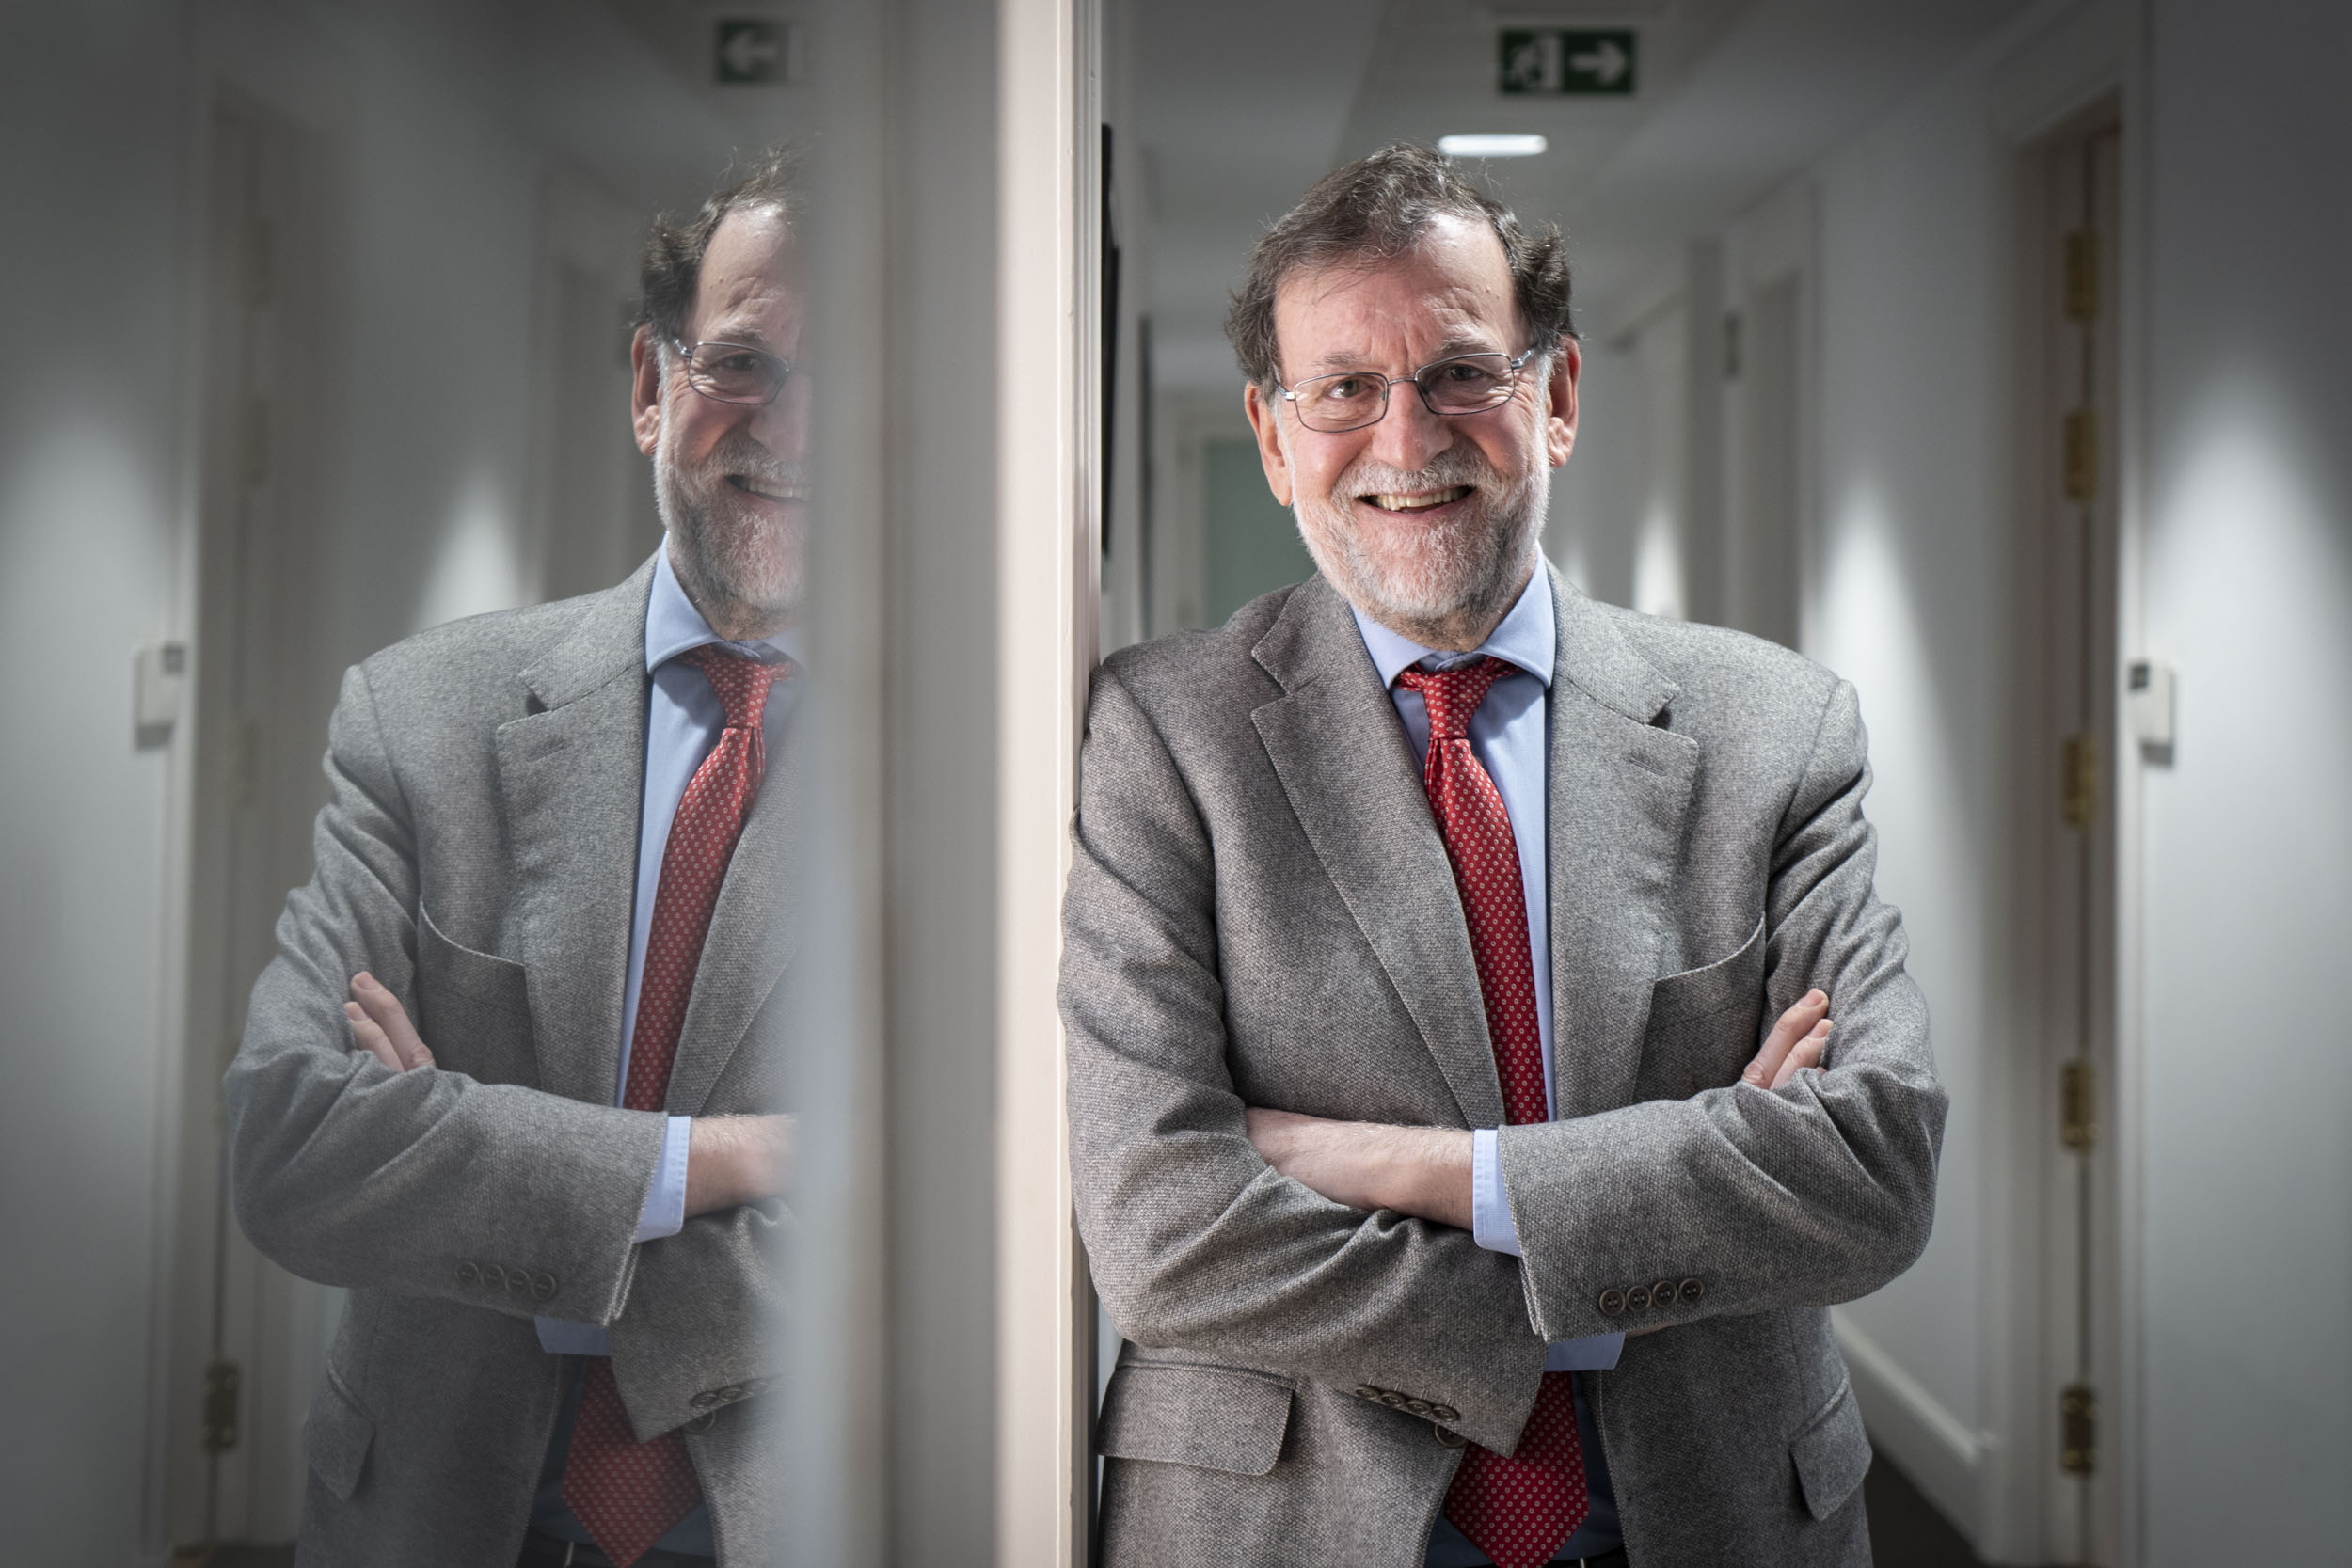 Entrevista a Mariano Rajoy